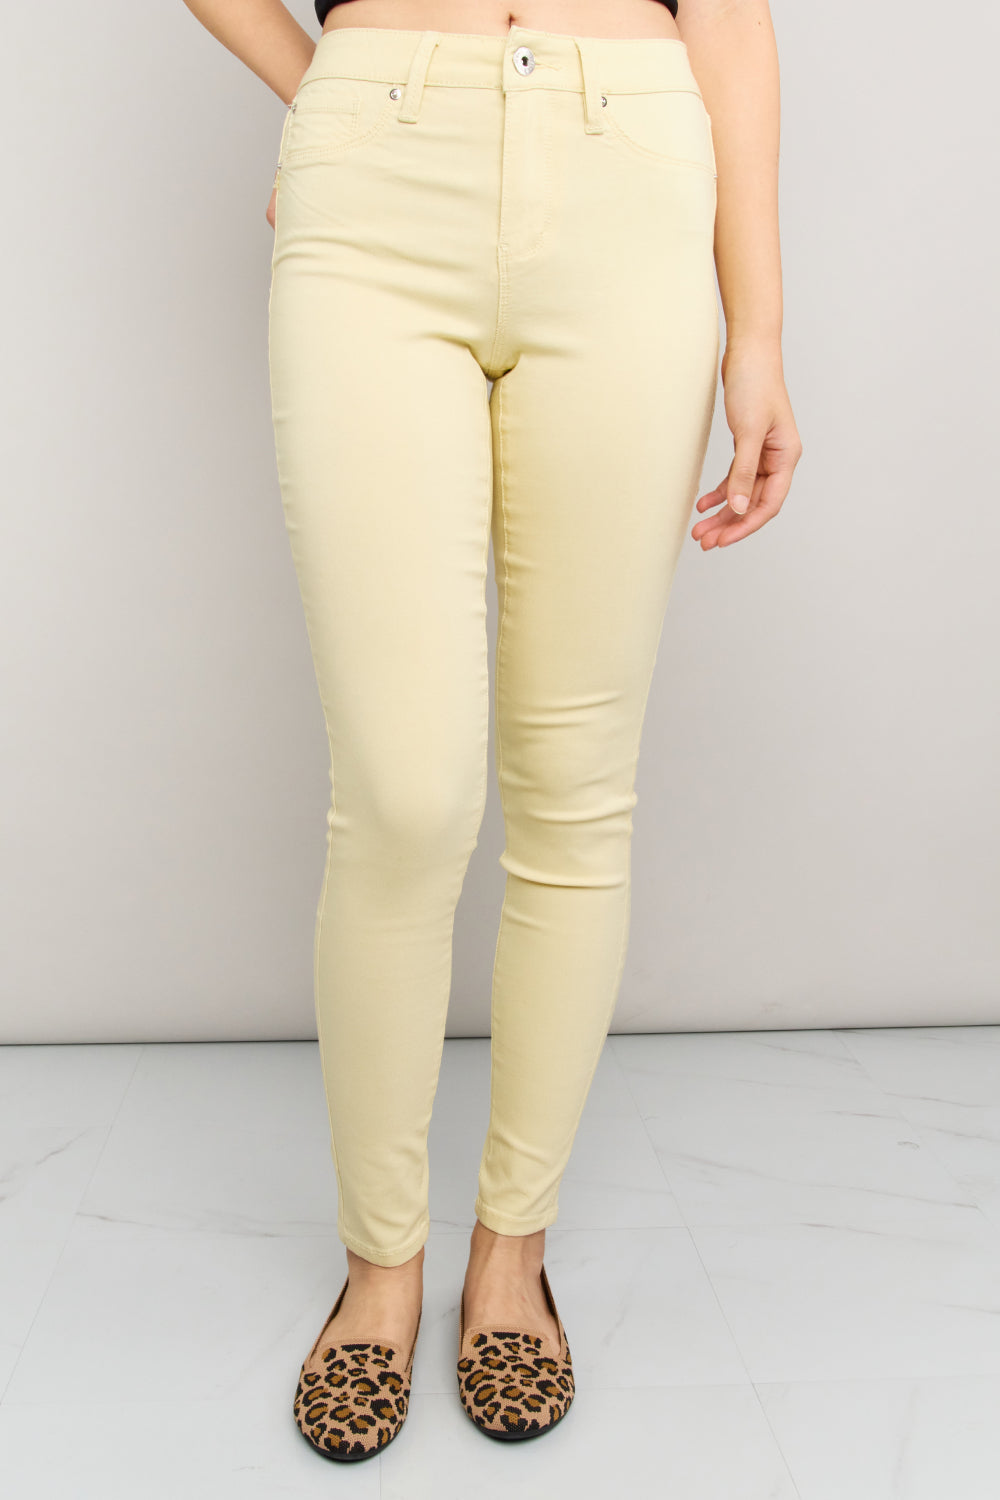 ymi-jeanswear-kate-hyper-stretch-full-size-mid-rise-skinny-jeans-in-banana-cream